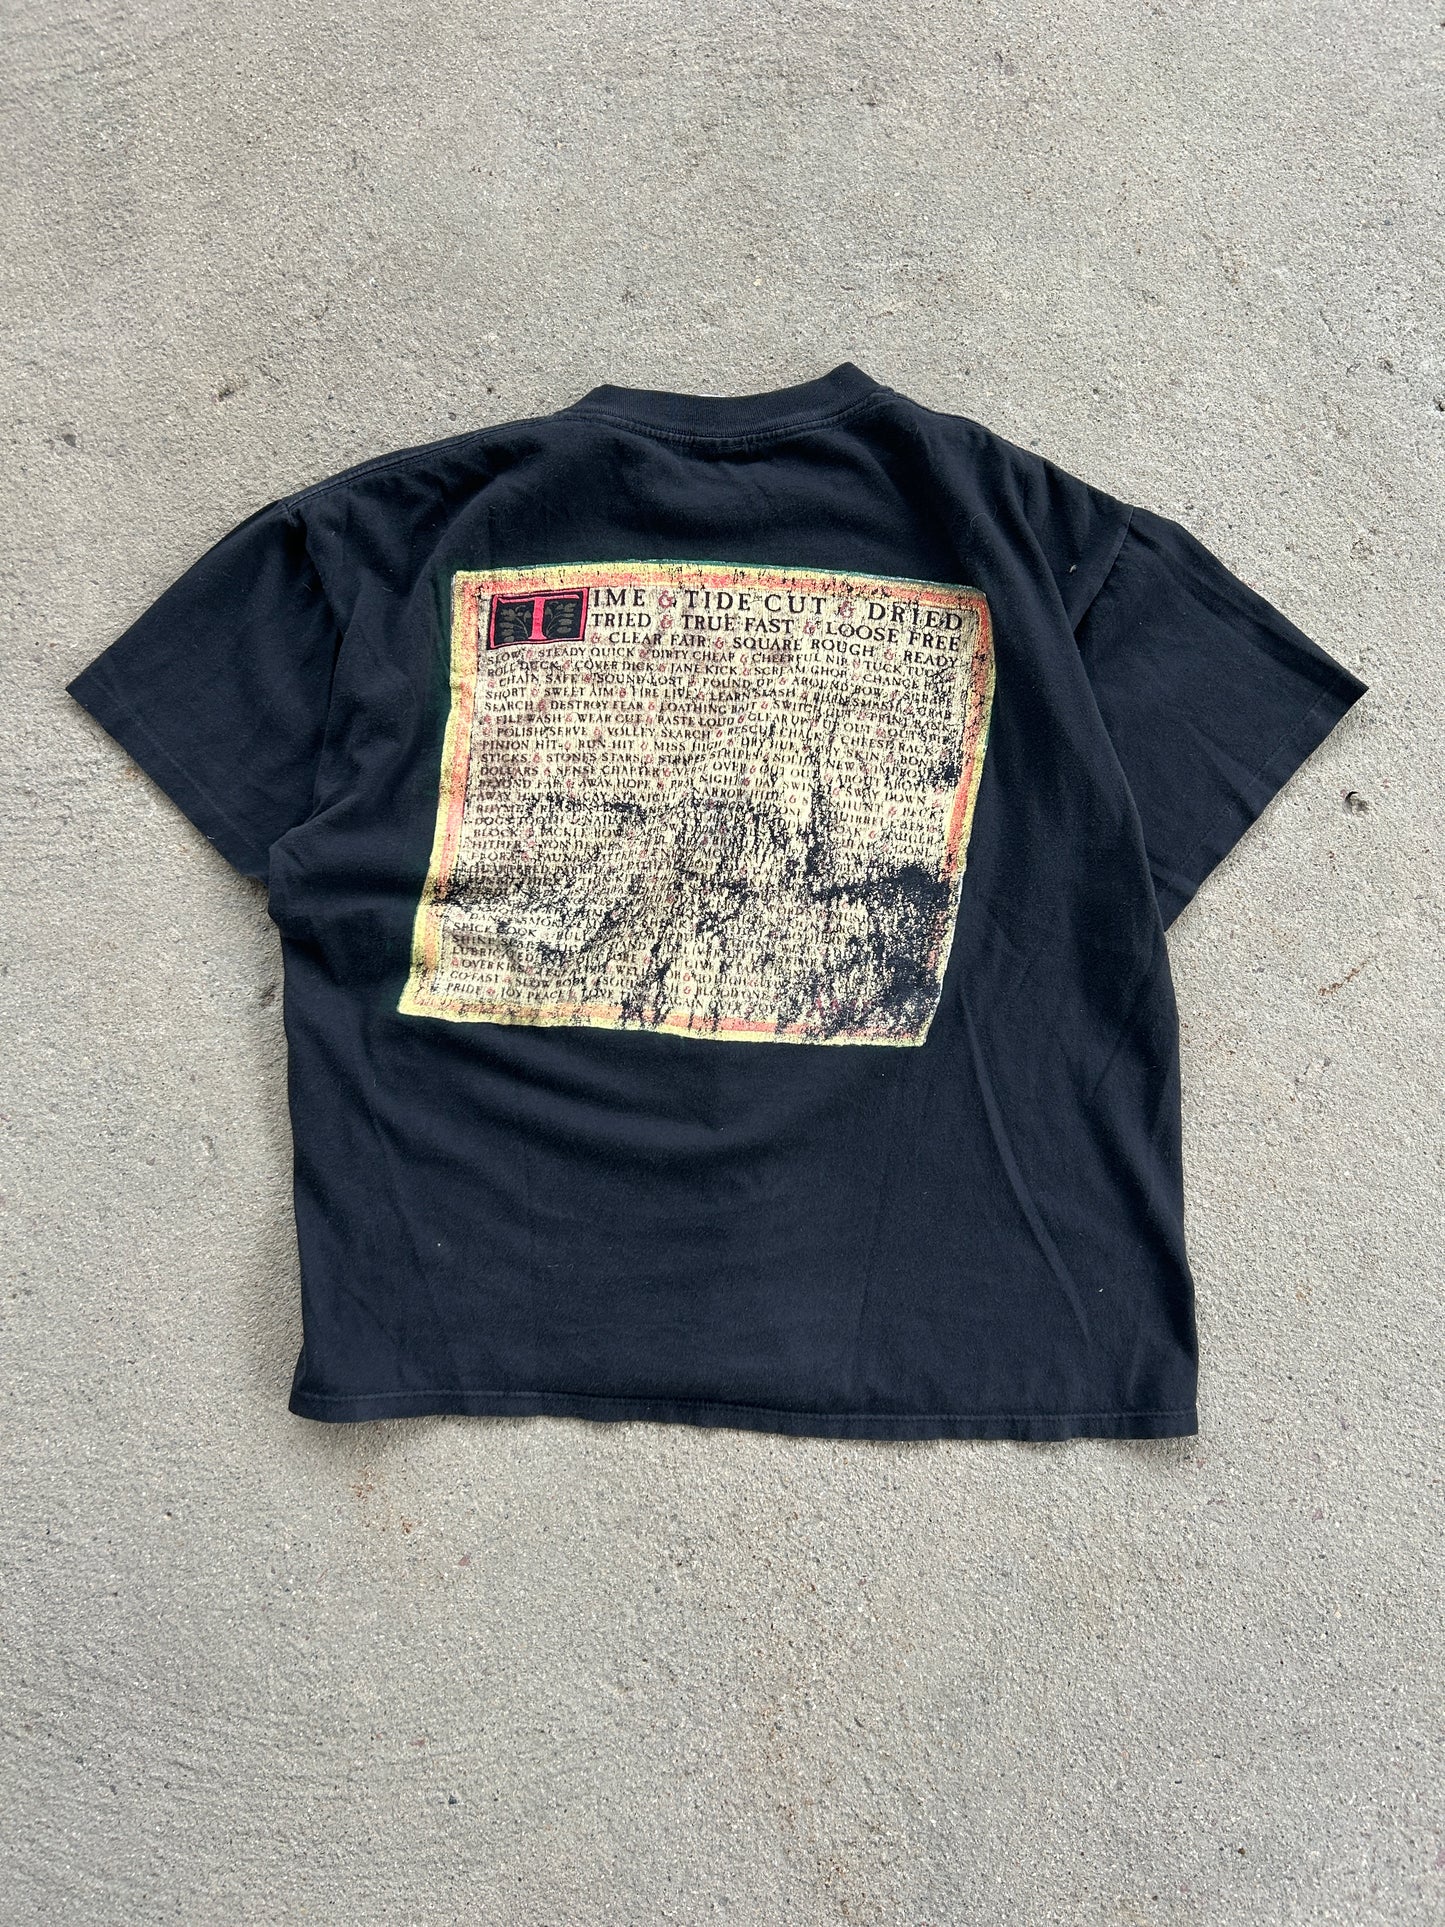 Vintage Rush Band Shirt - XL